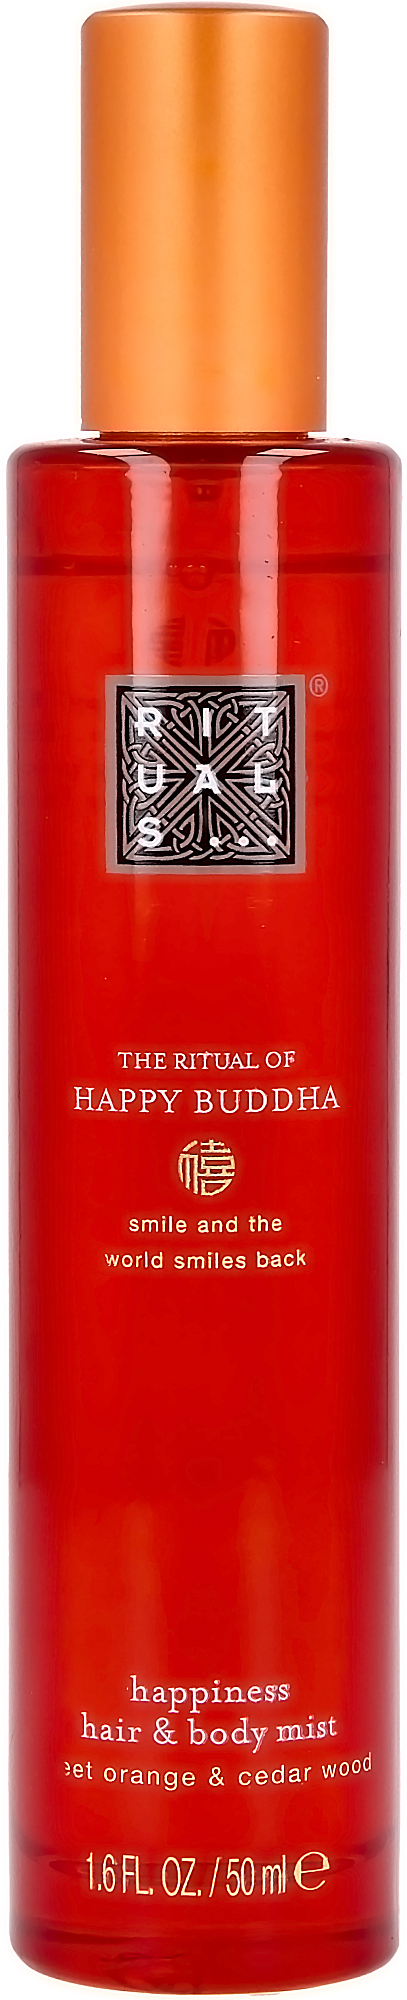 The Ritual of Happy Buddha Hair & Body Mist